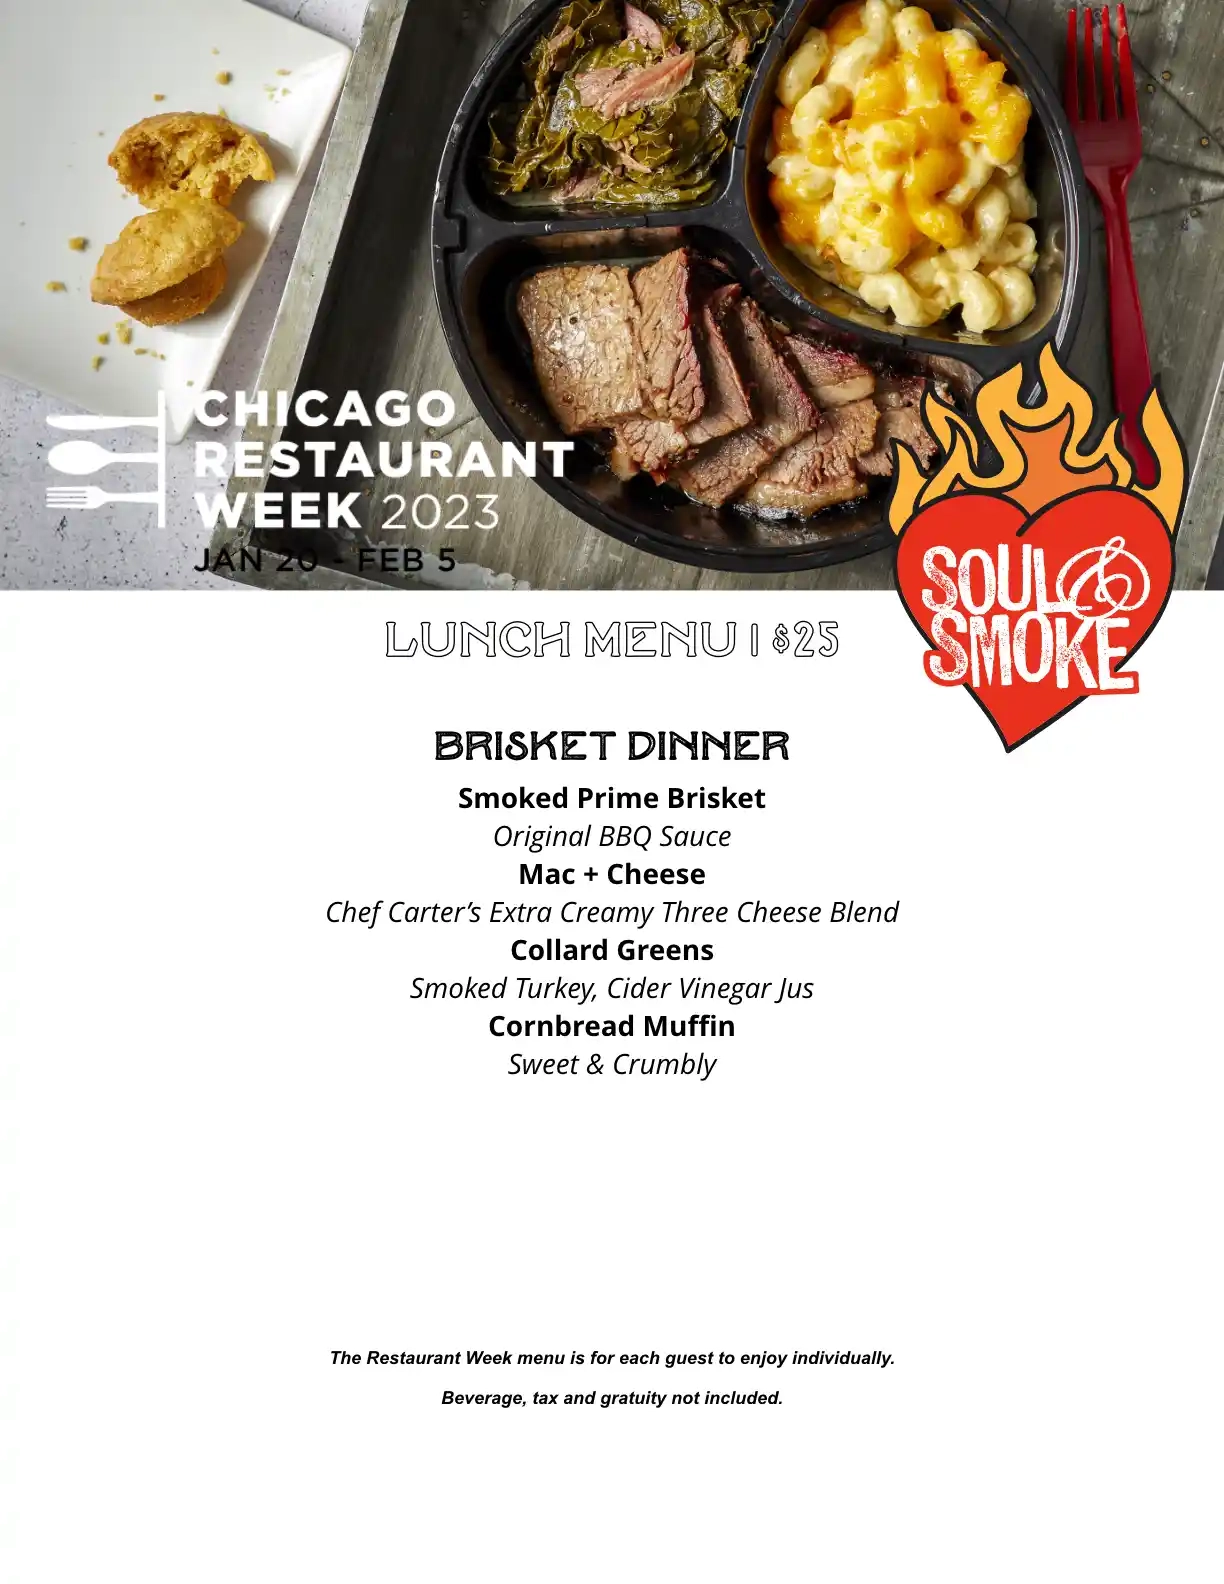 Chicago Restaurant Week 2023 Menu Soul And Smoke